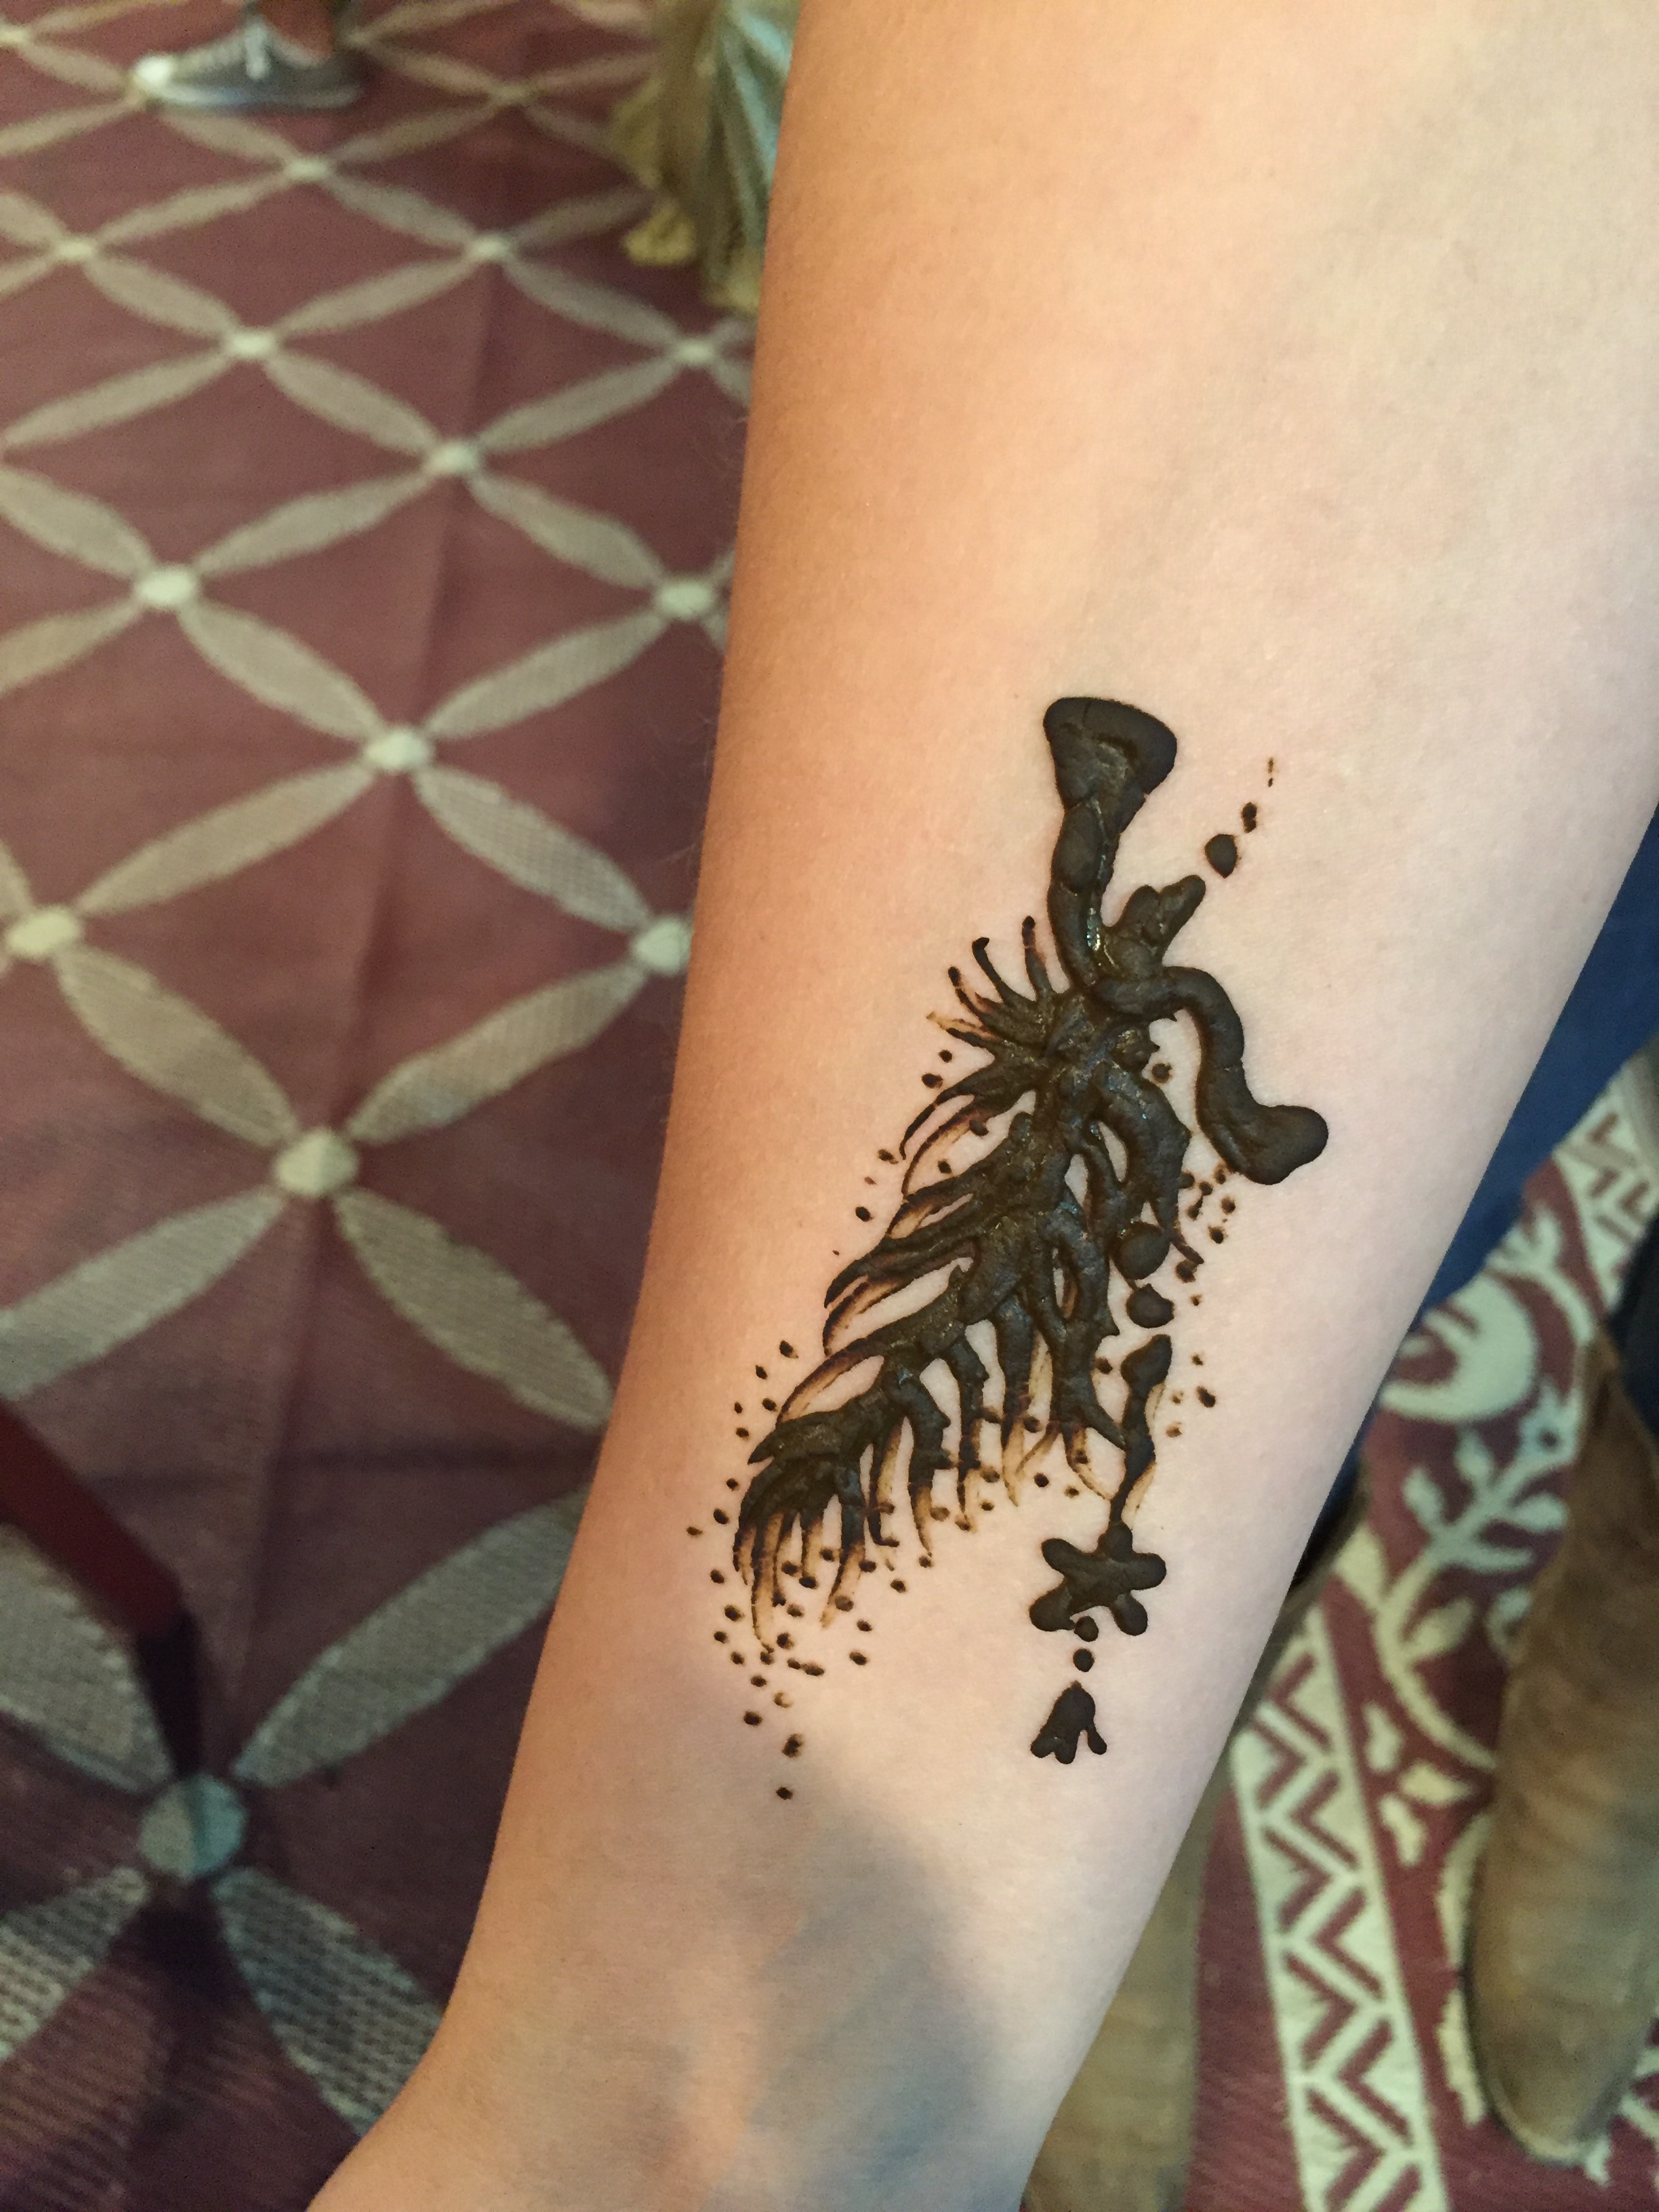 Cute small henna tattoos :) heart and infinity symbols | Small henna tattoos,  Small henna, Simple henna tattoo